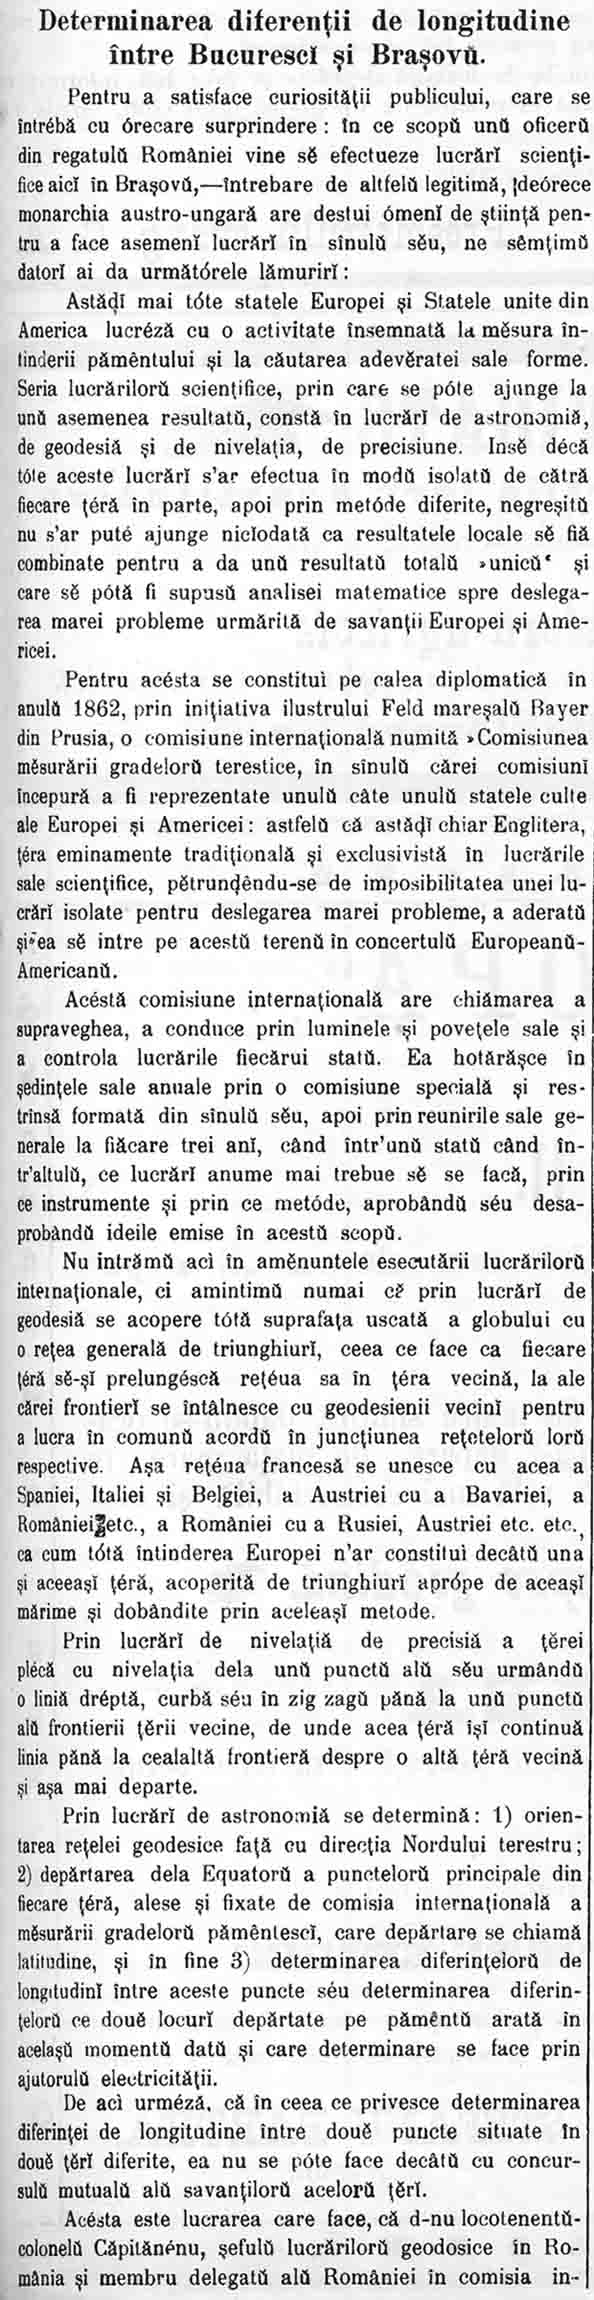 Gazeta Transilvaniei / nr. 189 | 25 august 1885